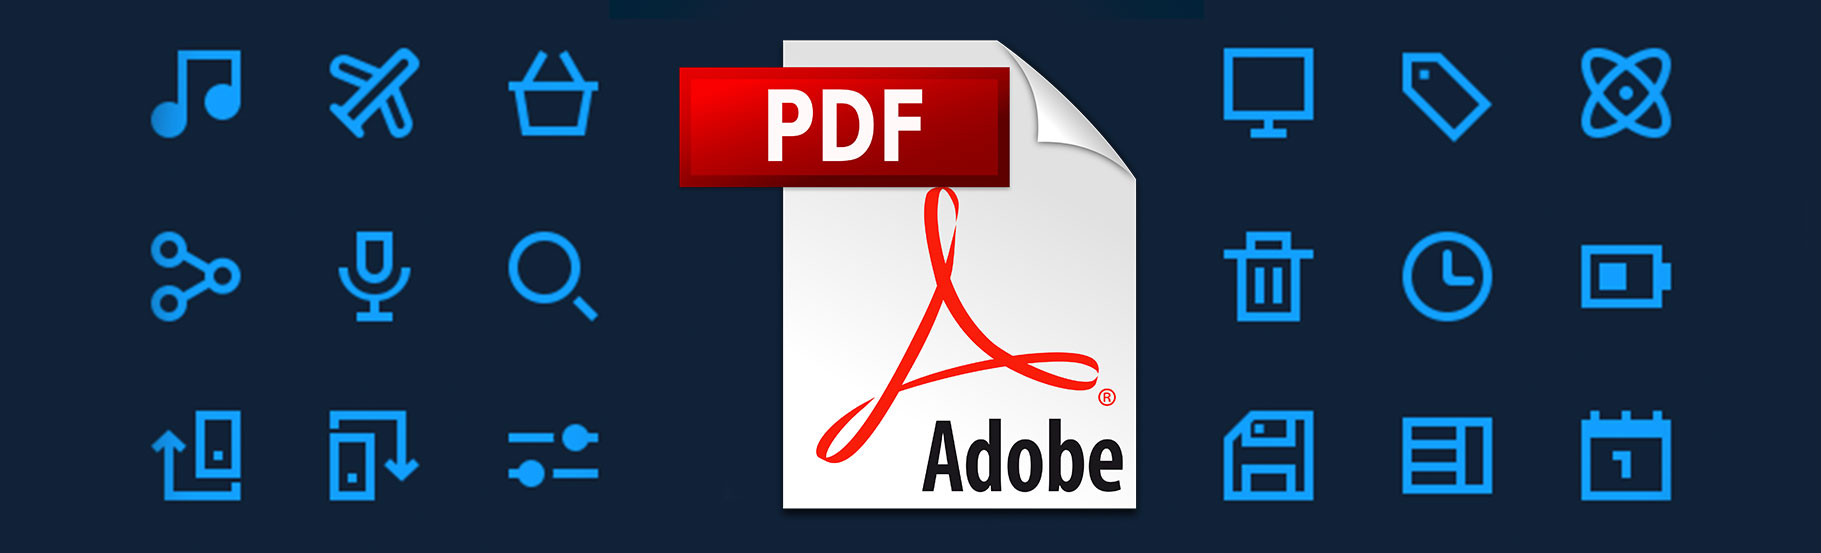 Adobe PDF ikonica